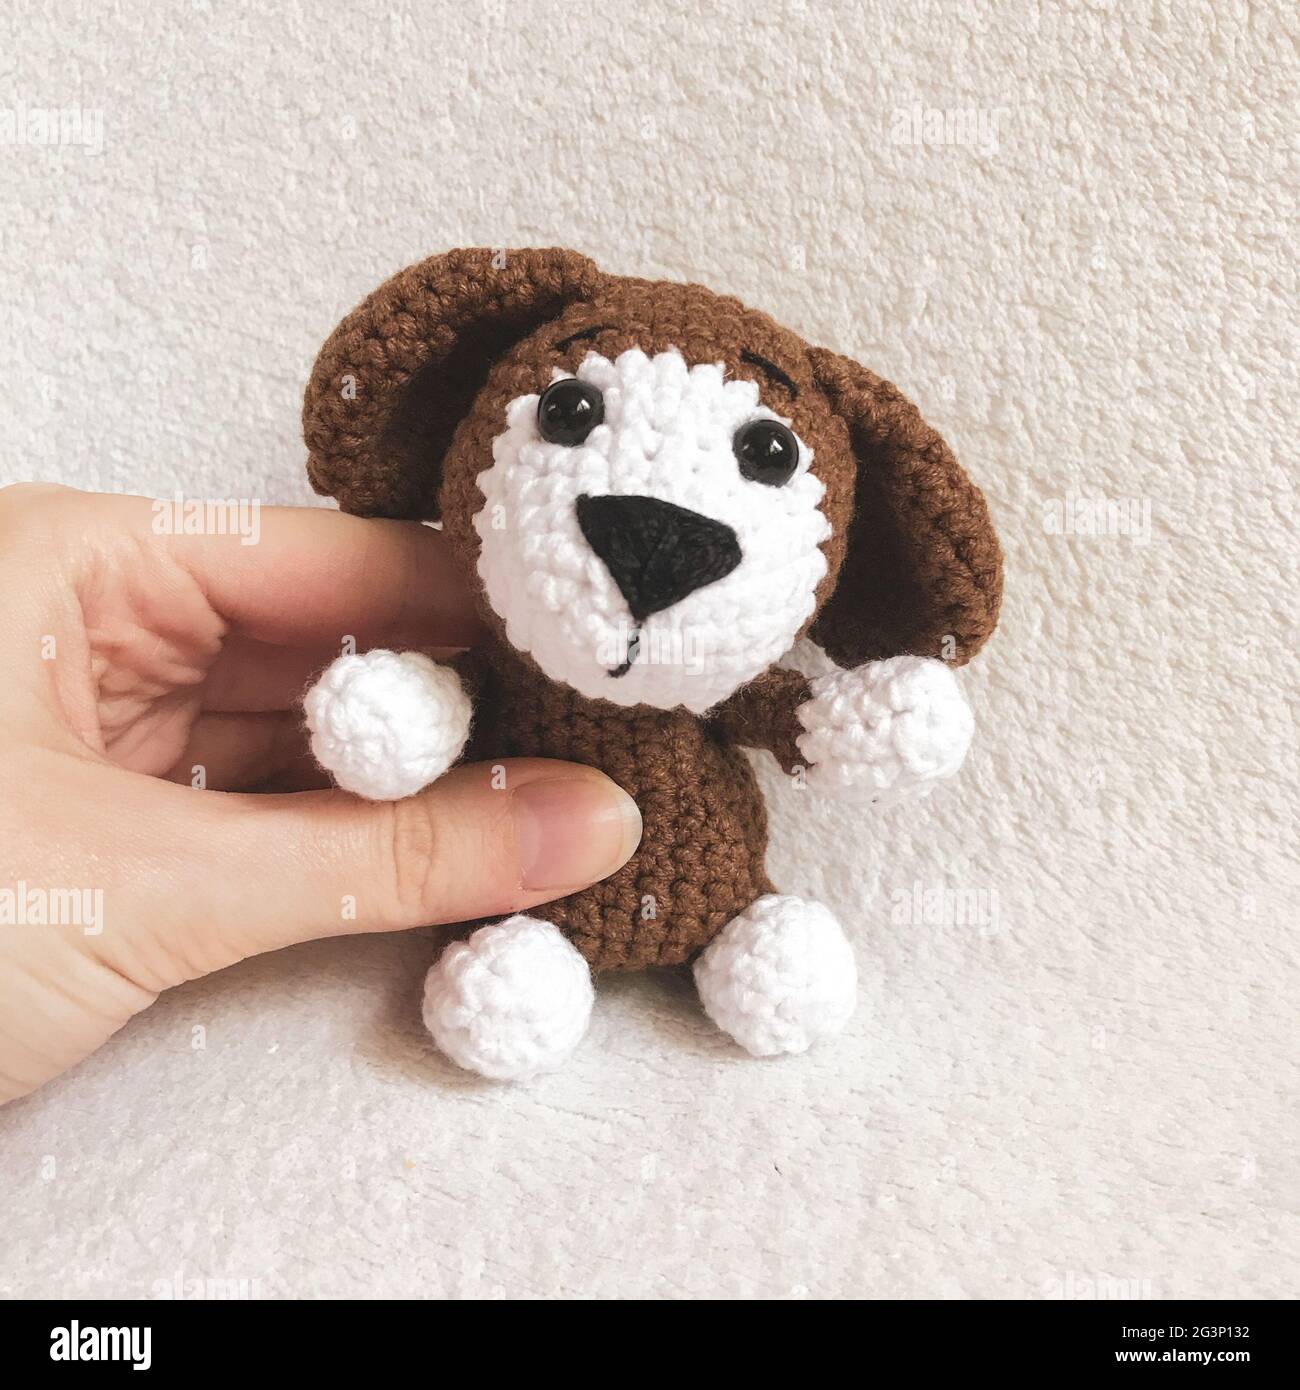 Handmade Crochet Animal Toy - Amigurumi Stuffed Toy - Puppy Dog Stock Photo